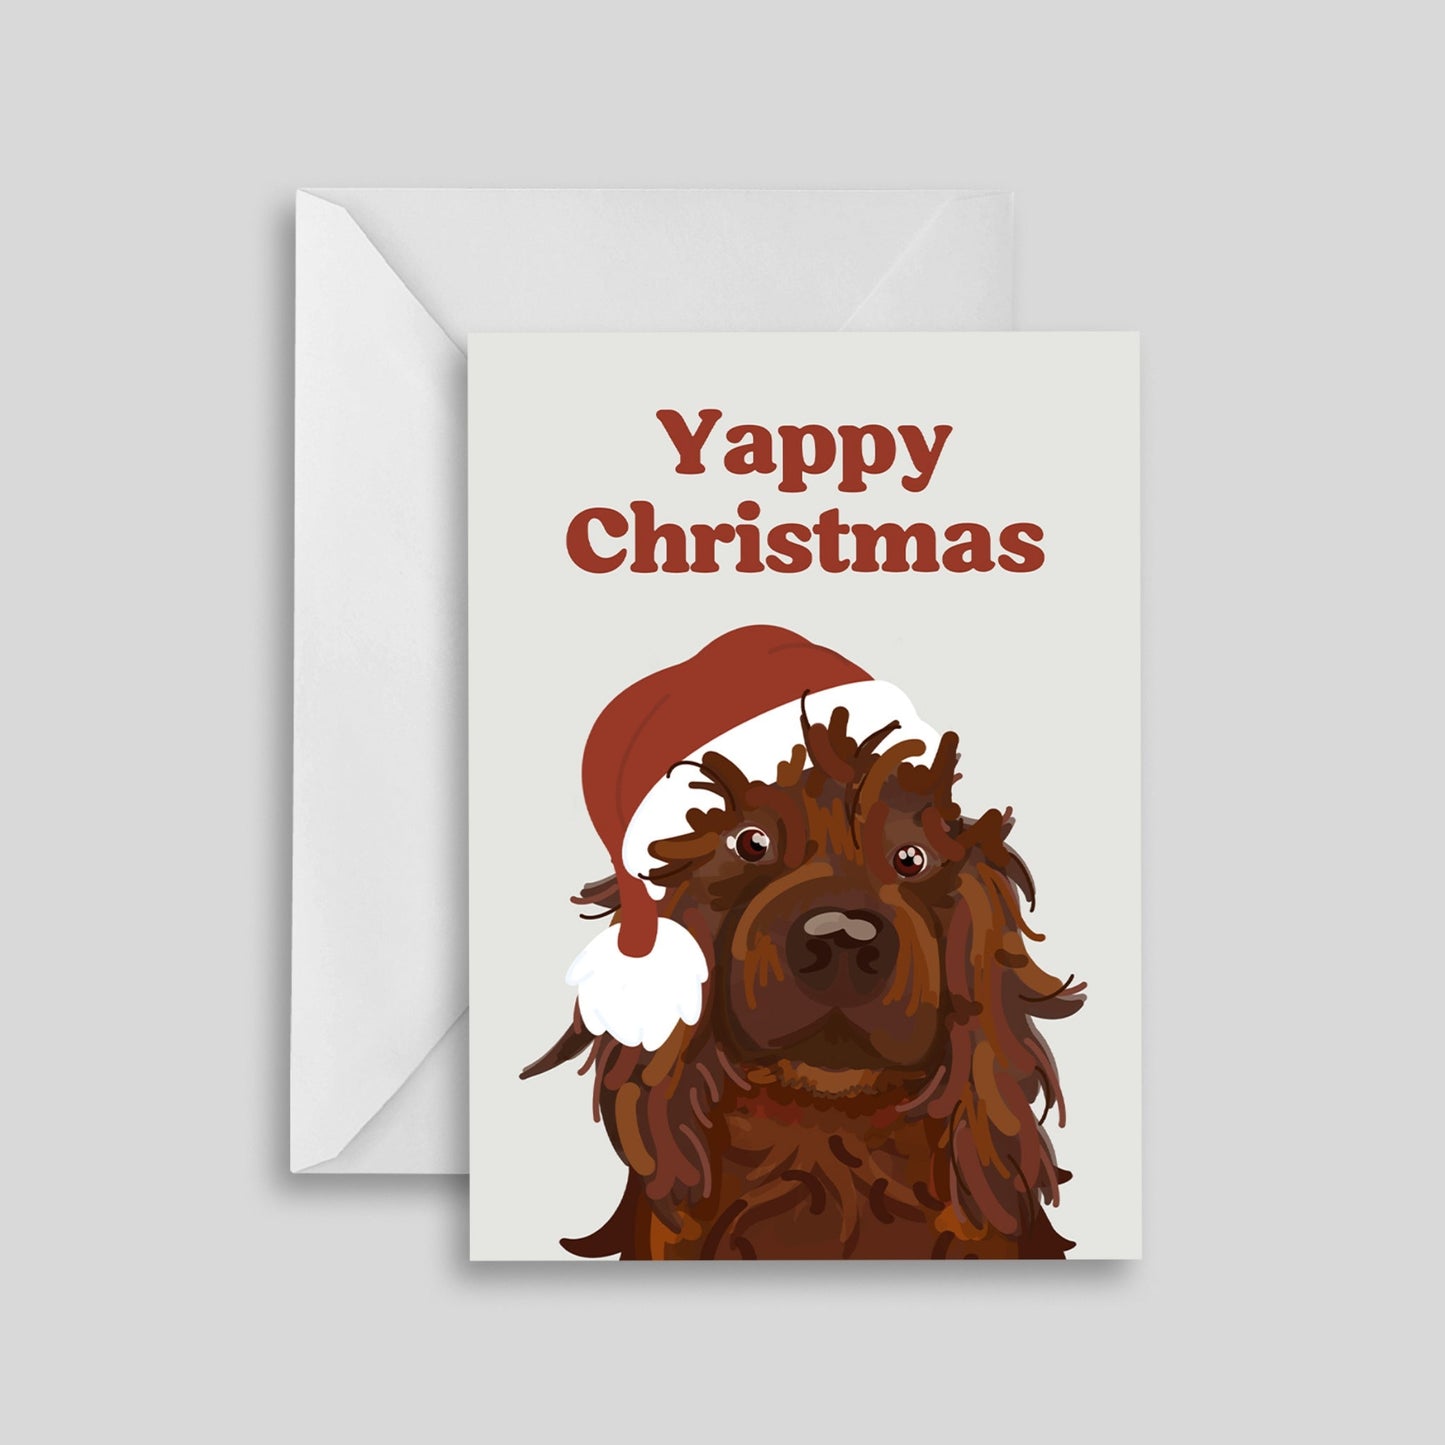 Wren & Rye Dog Christmas Card - Yappy Christmas (Santa Paws) Cream & Red